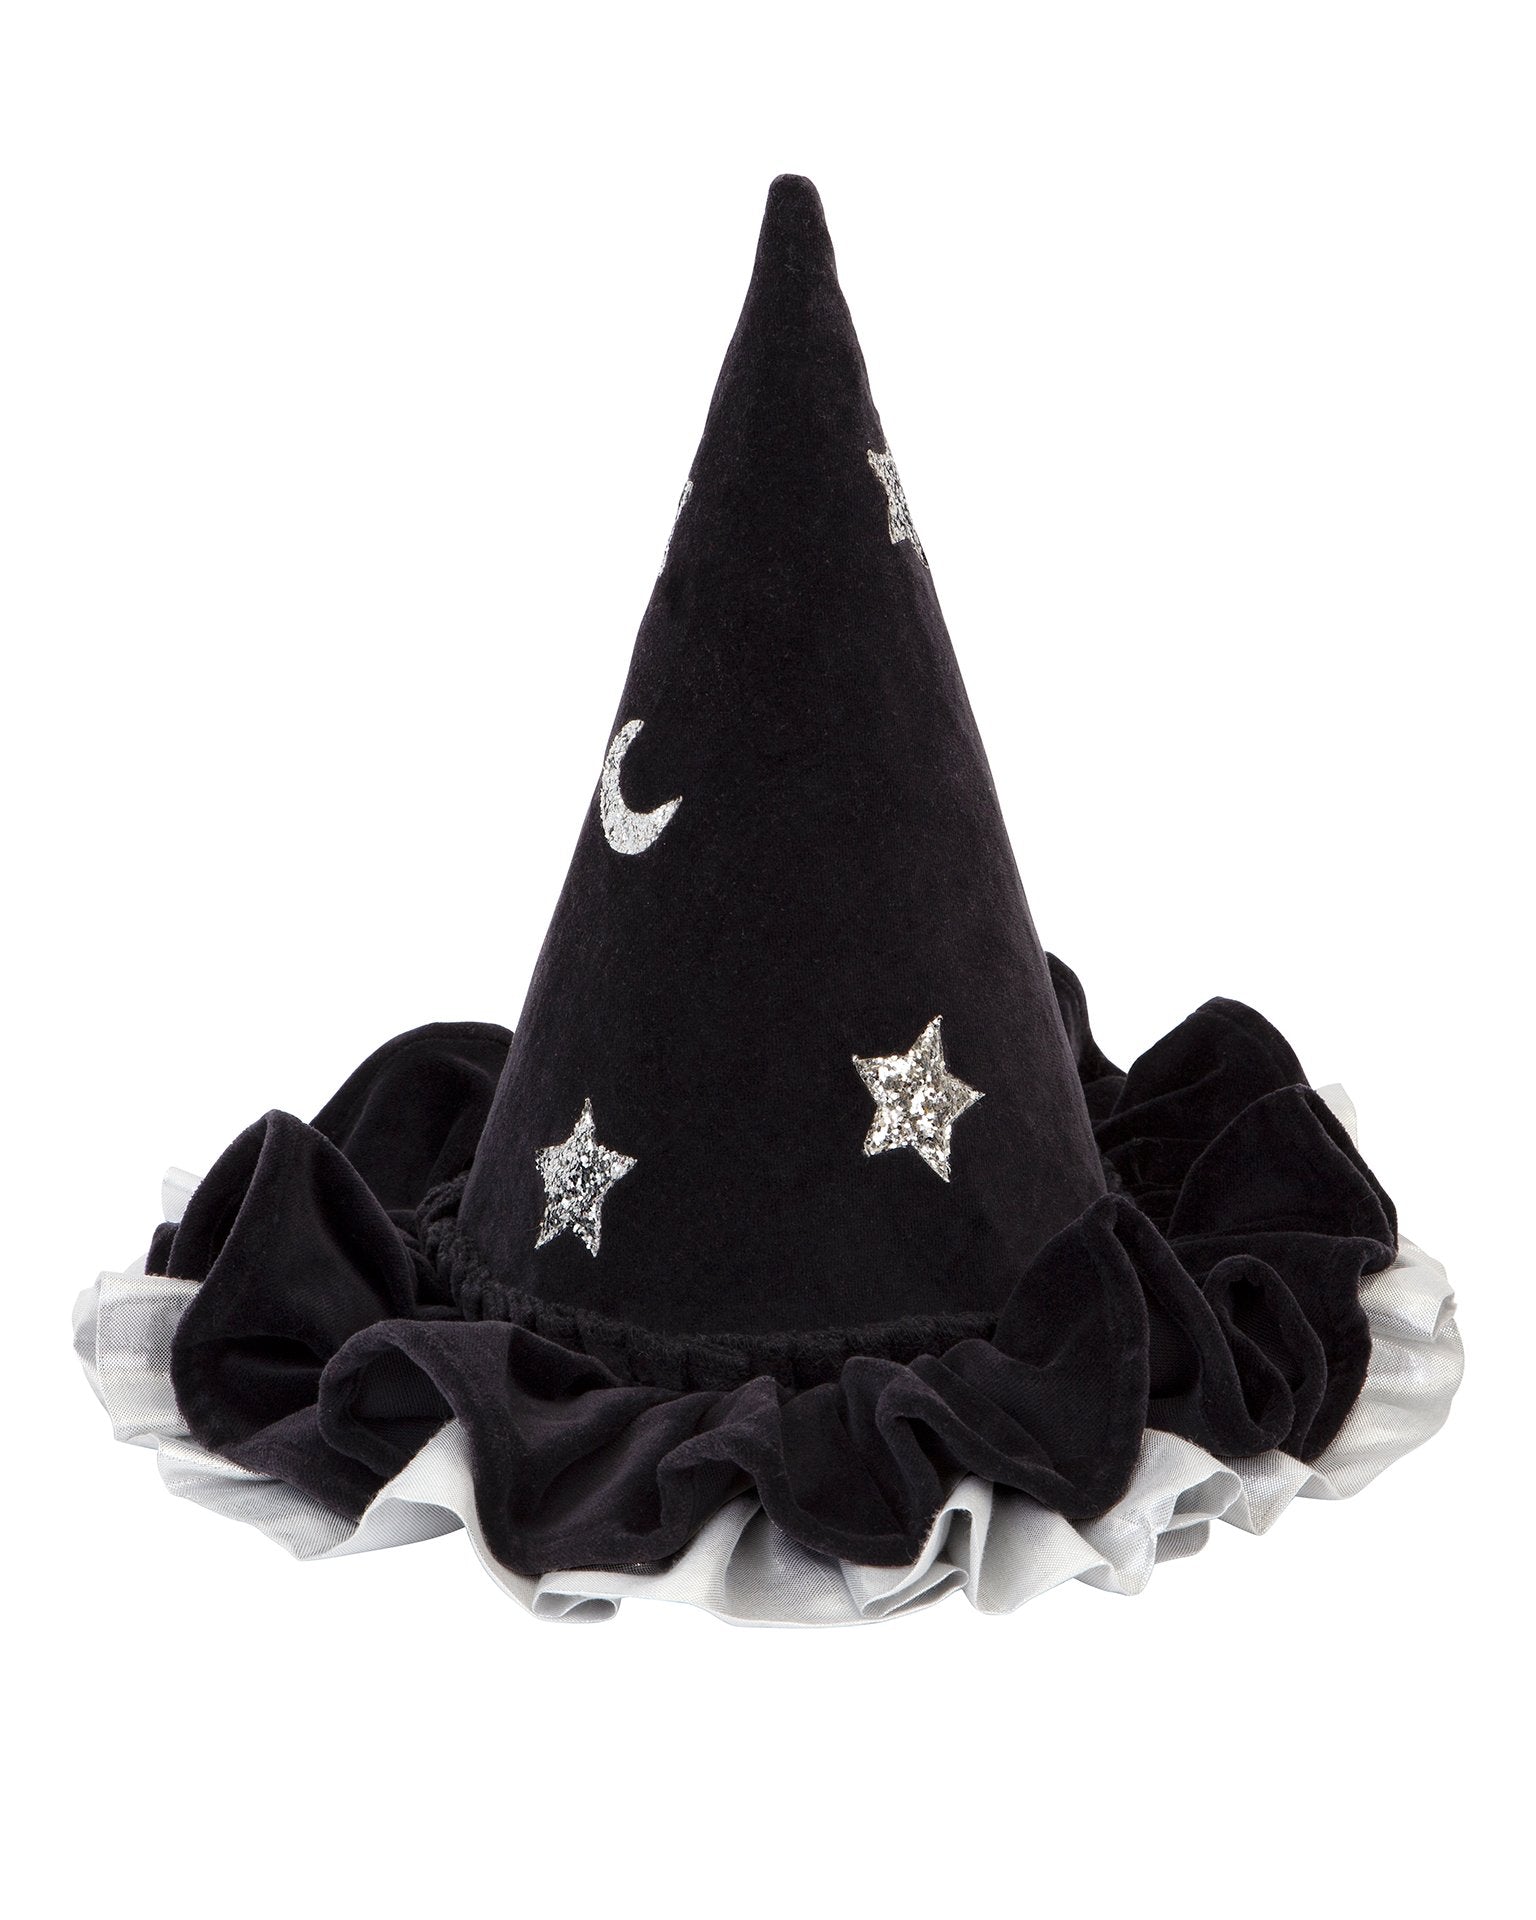 Little meri meri paper+party pointed black hat